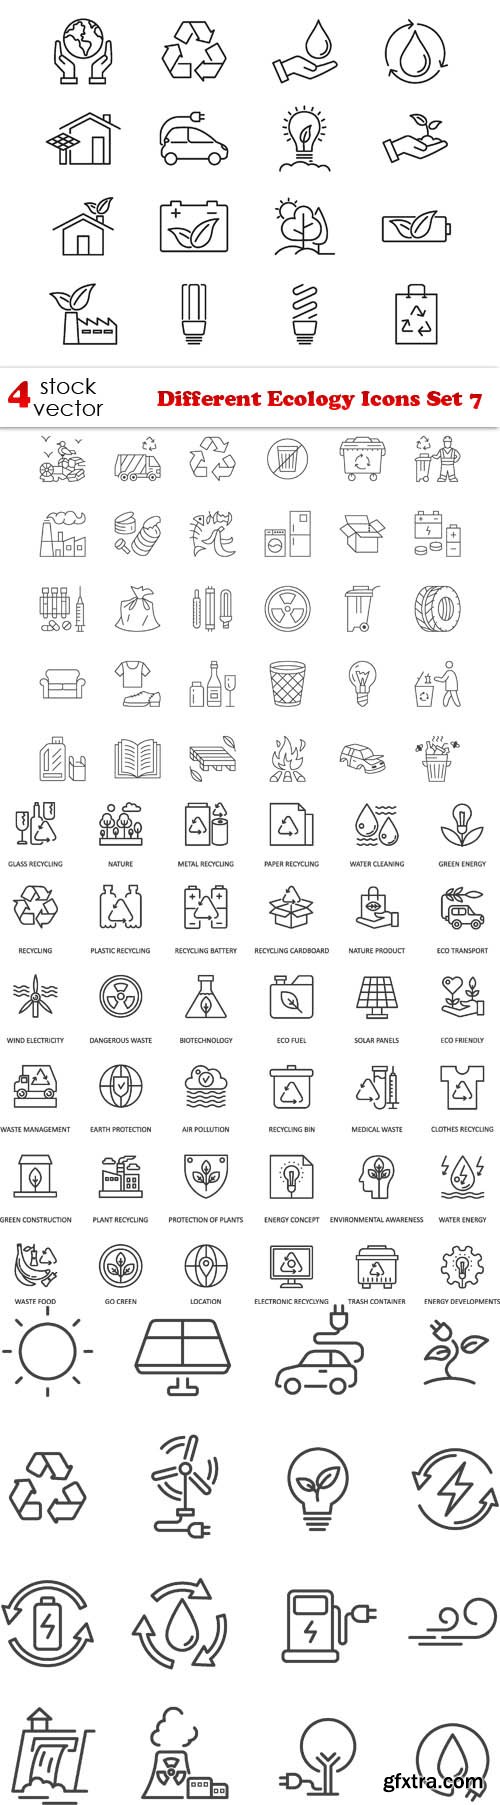 Vectors - Different Ecology Icons Set 7